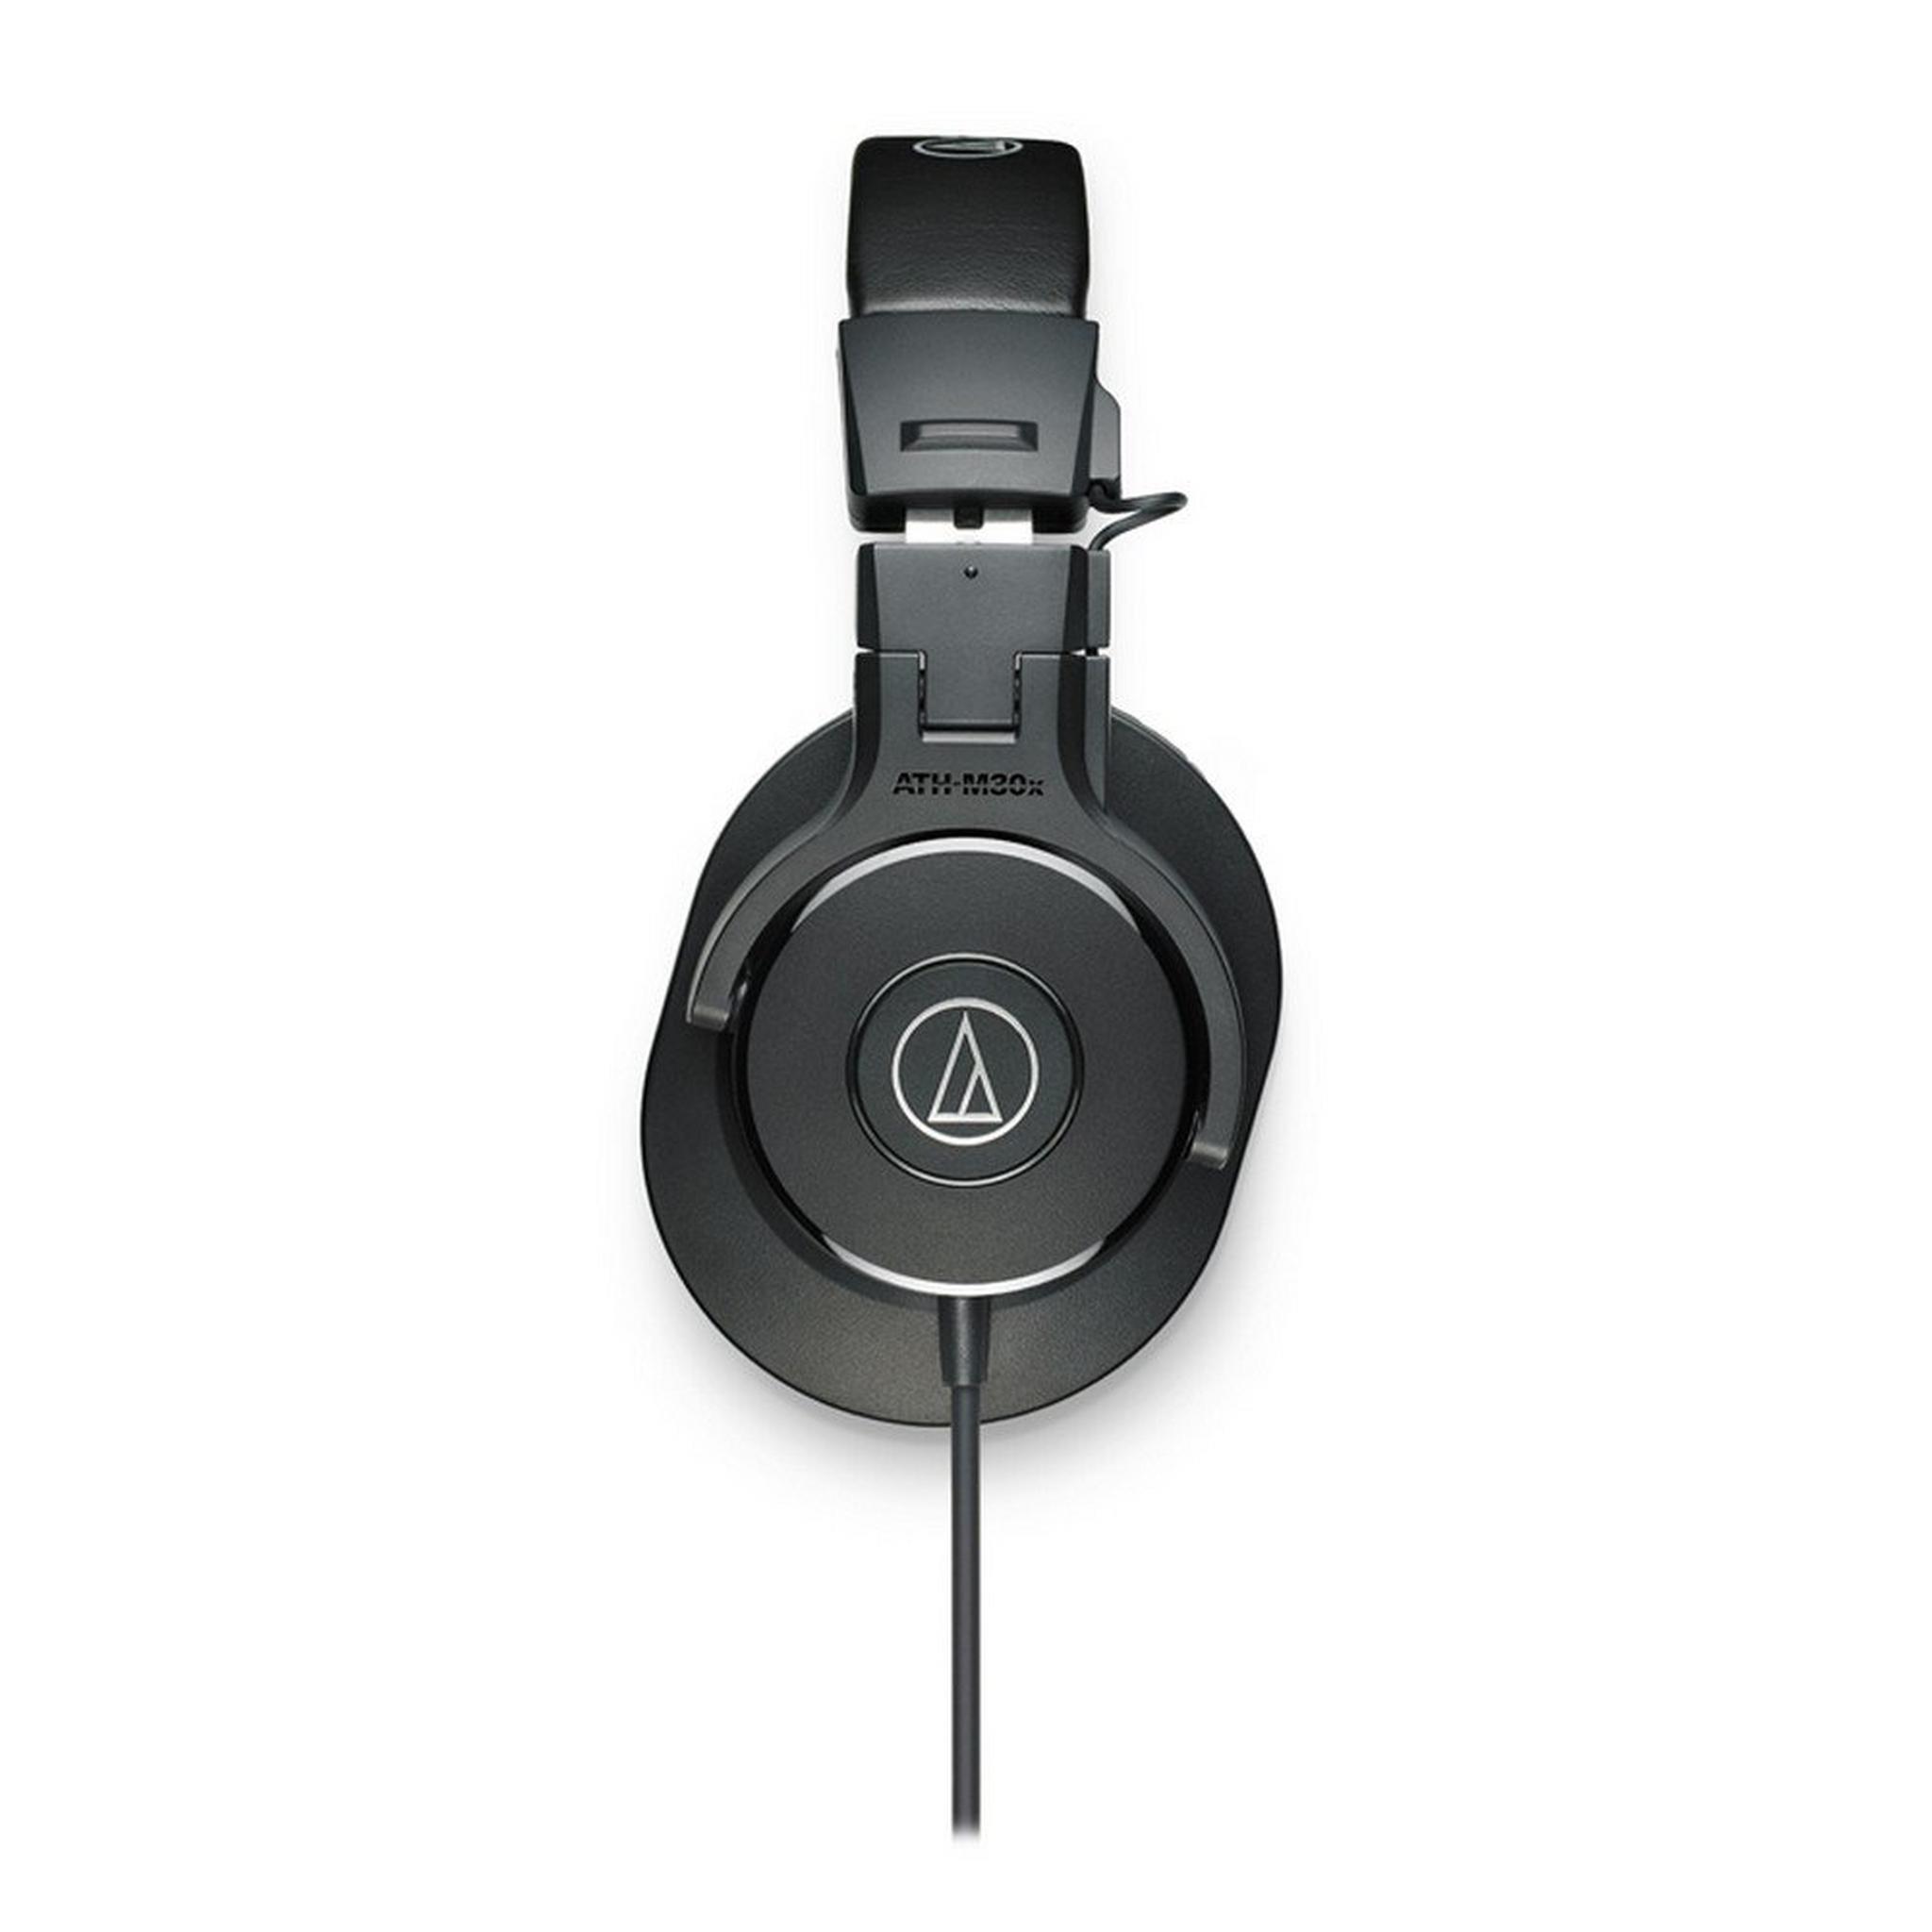 Audio Technica  Studio Headphones, ATH-M30x – Black